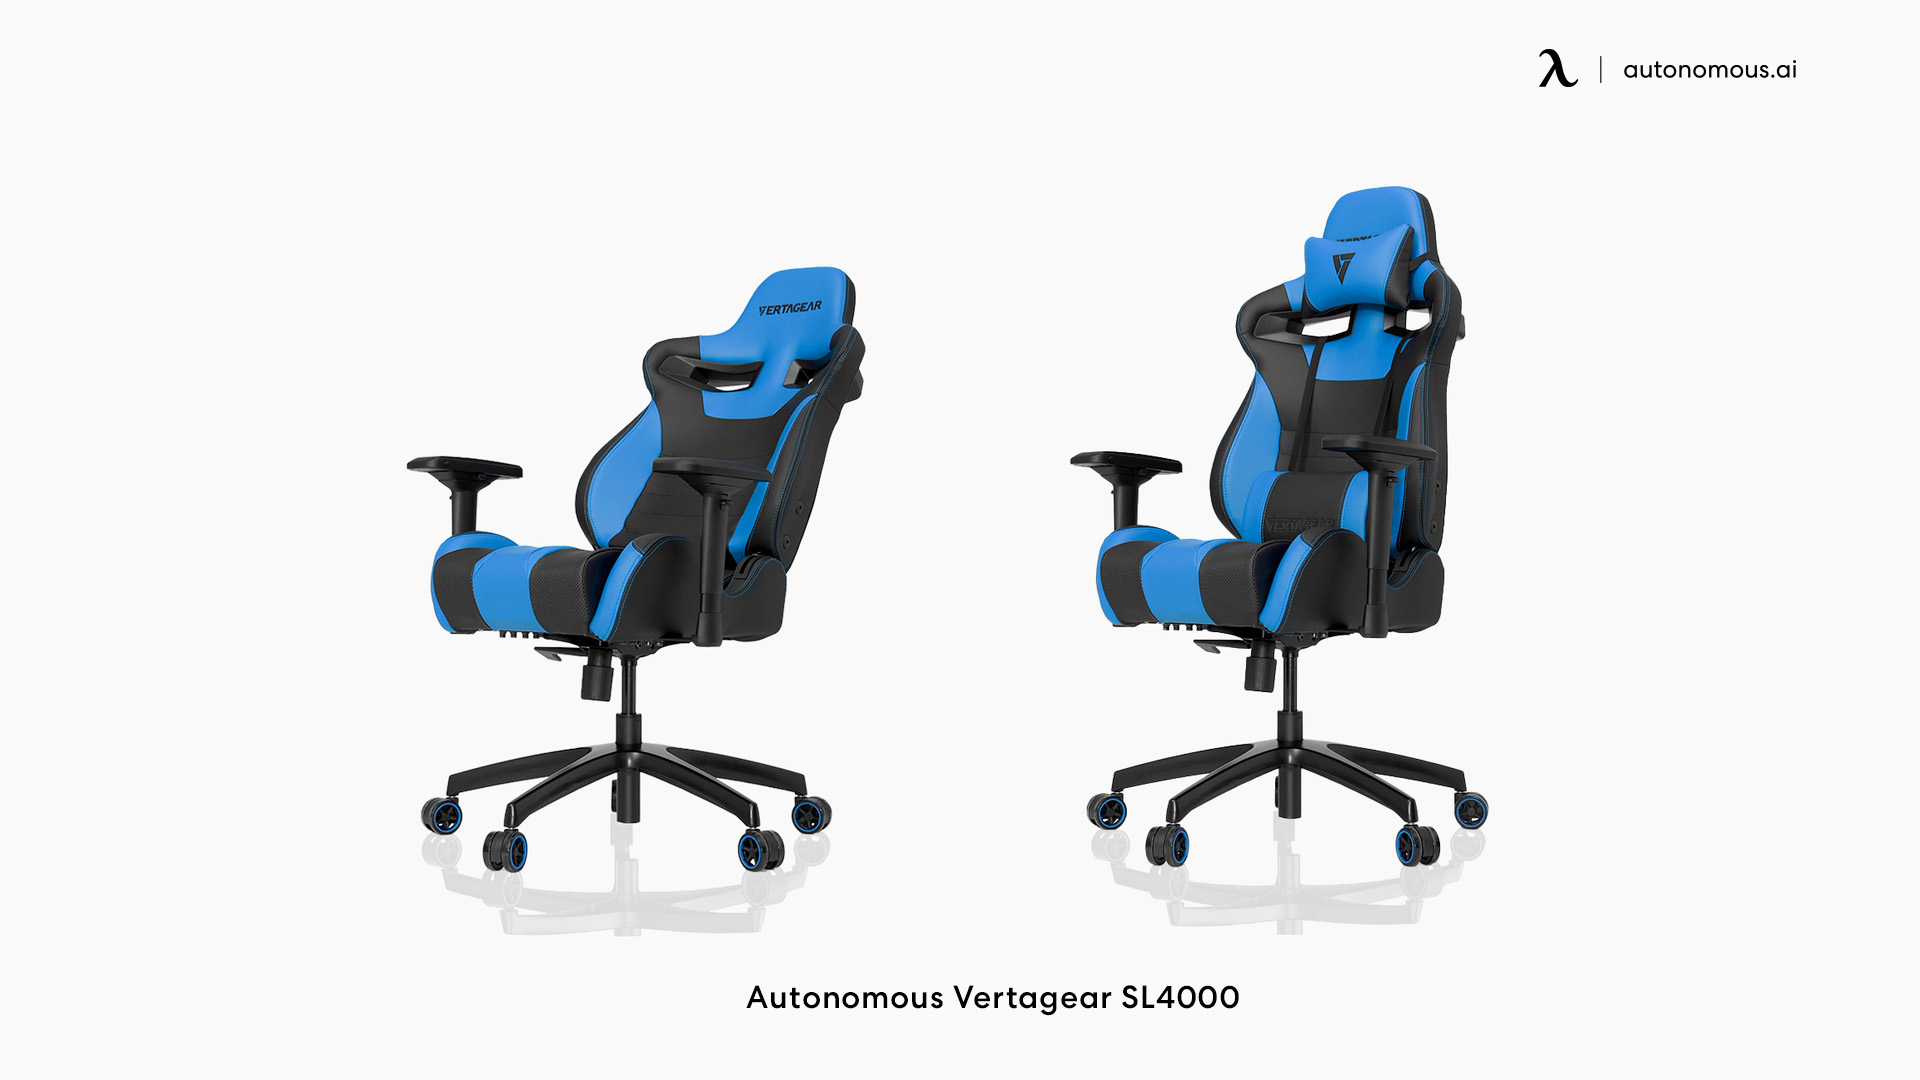 Vertagear SL4000 Gaming gaming chair under $400